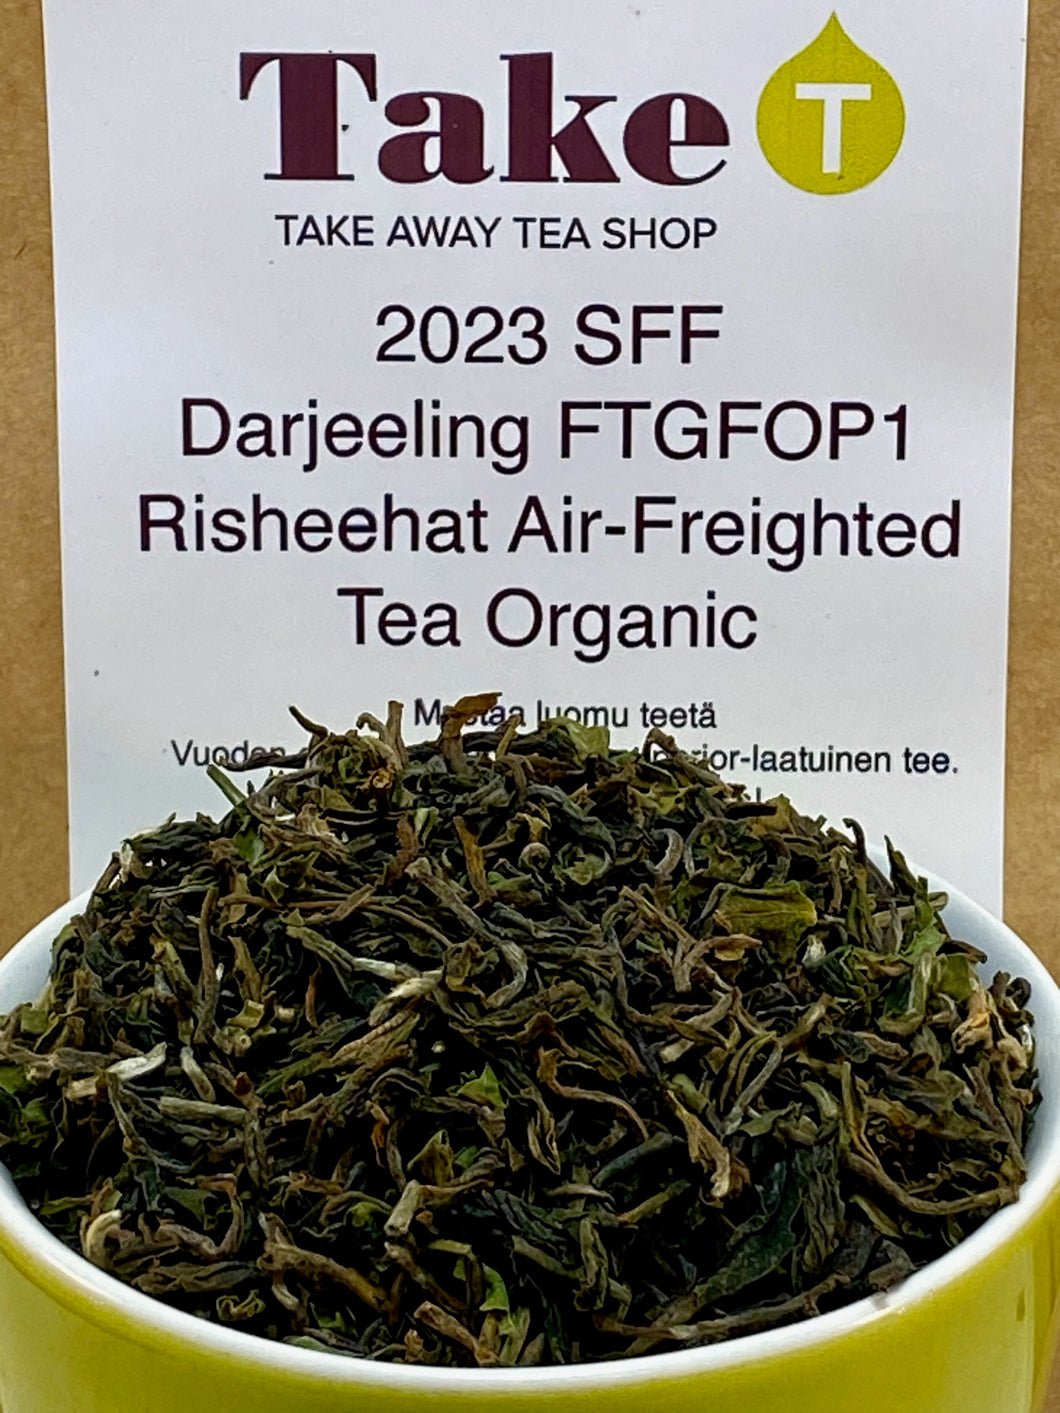 2023 Darjeeling Risheehat FTGFOP1 Air-Freighted Tea Organic